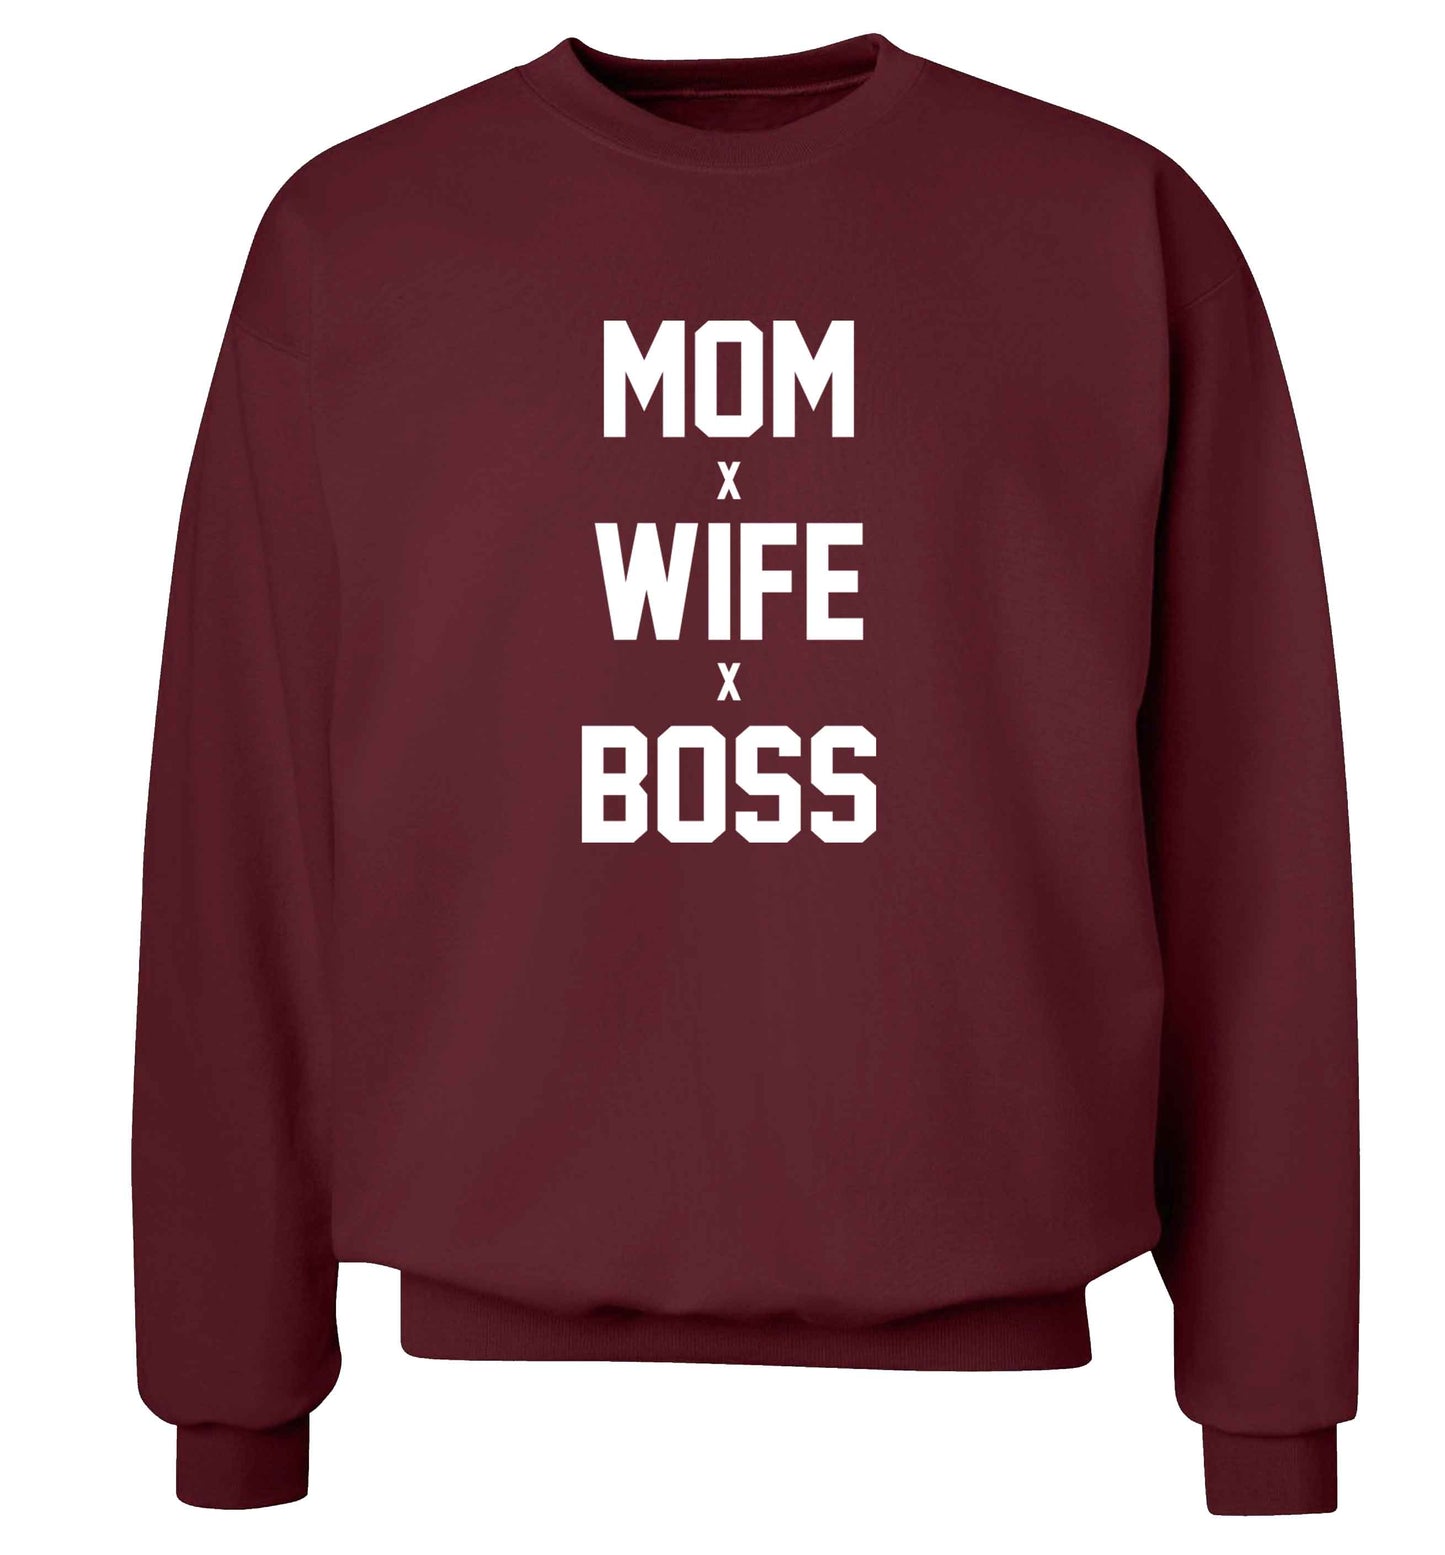 Mum wife boss adult's unisex maroon sweater 2XL